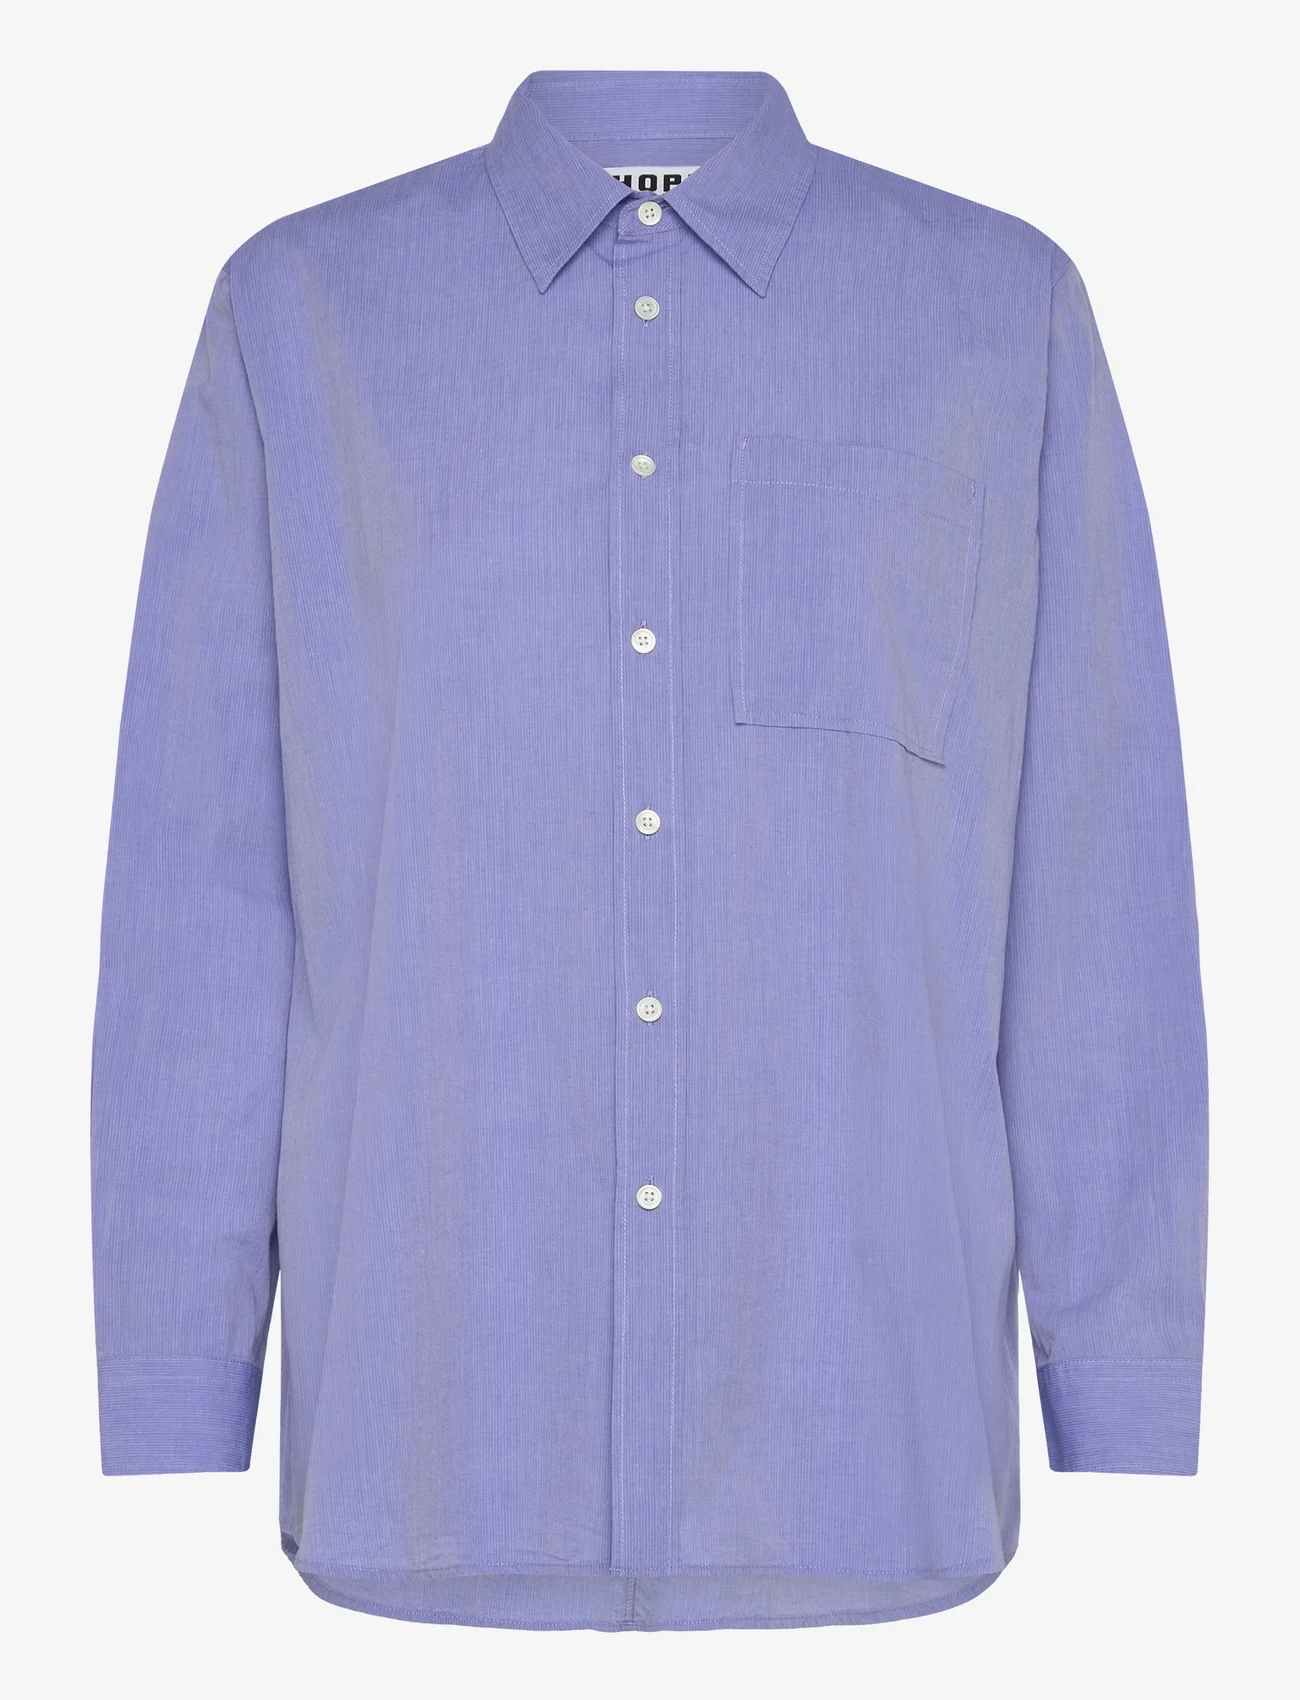 Hope - Elma Edit Shirt Mid Blue Micro Stripe - jeansblouses - mid blue micro stripe - 1